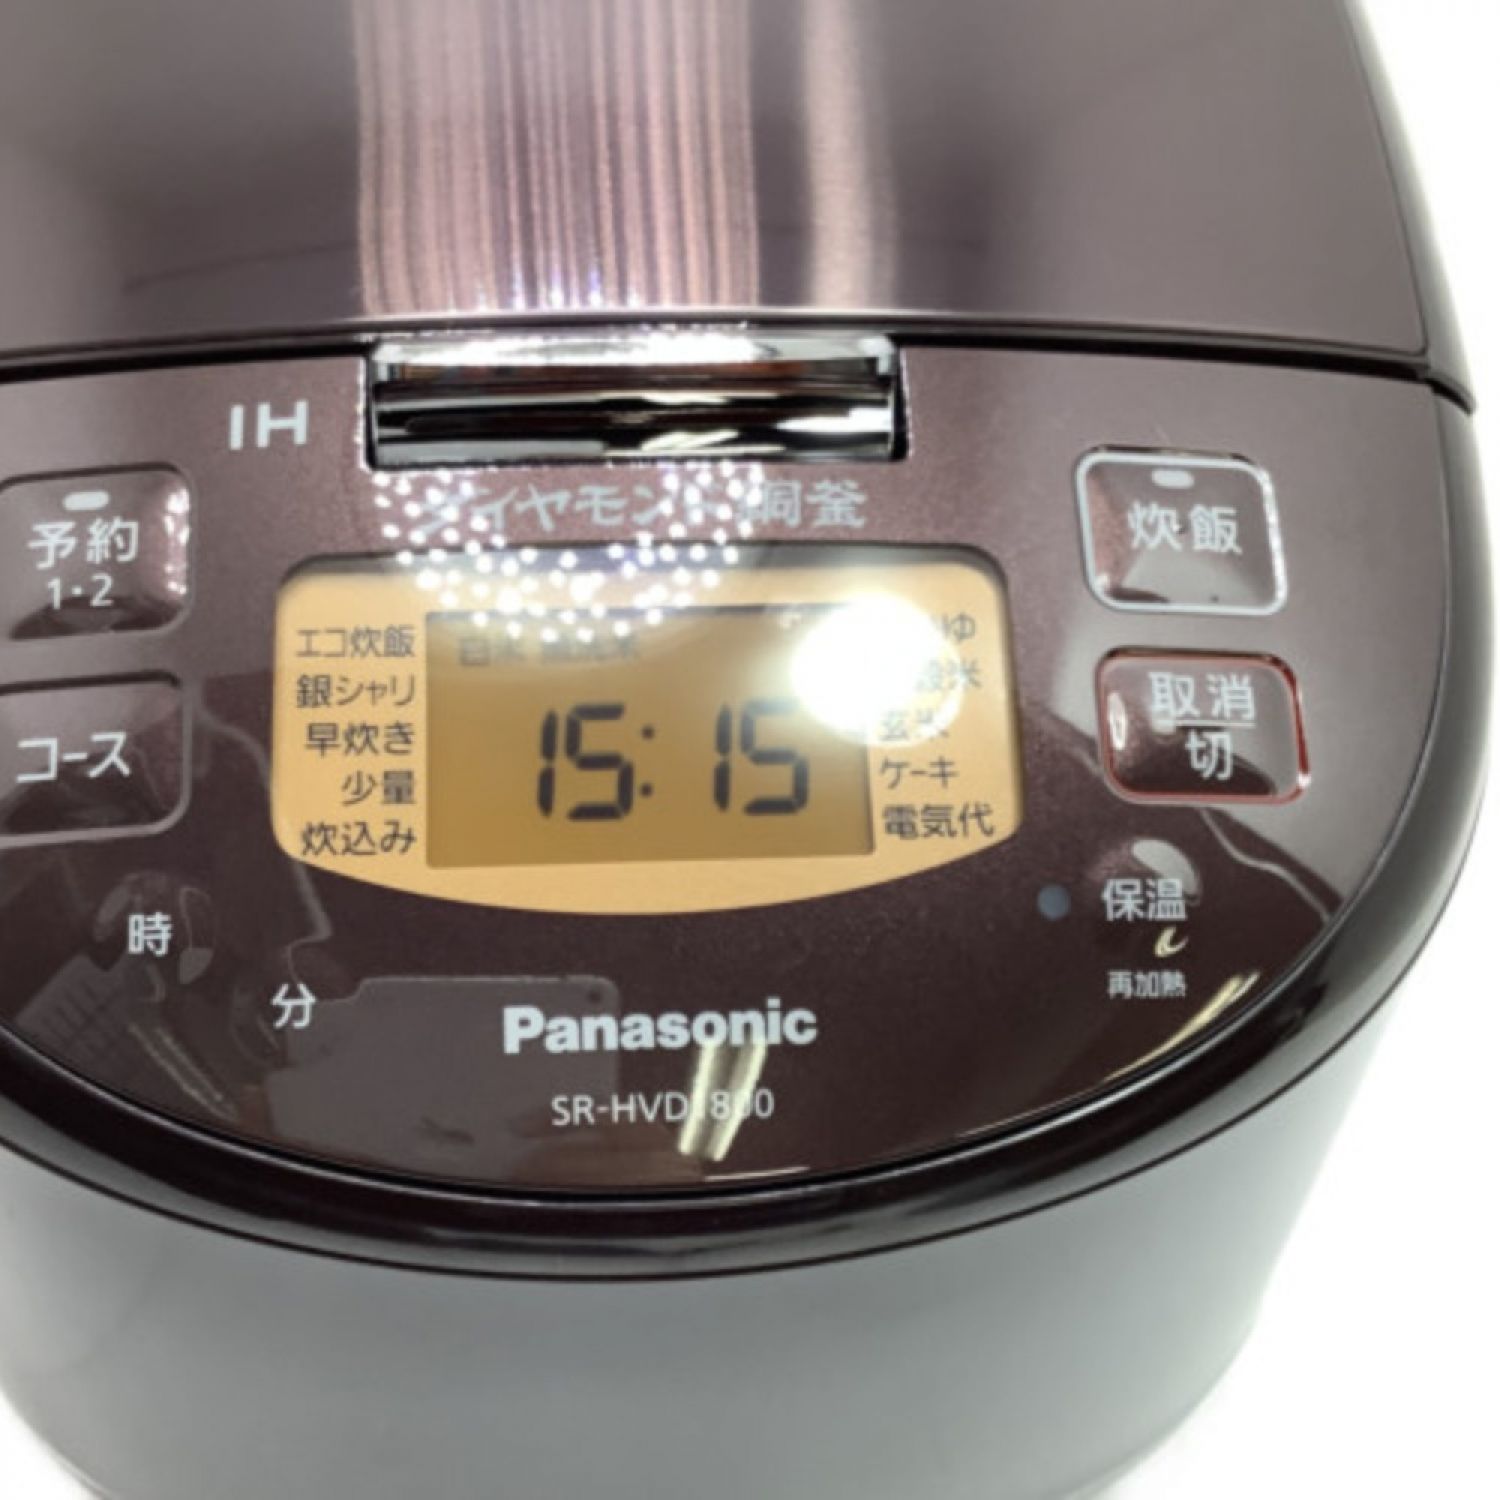 Panasonic 炊飯器 SR-HVD1800-T ブラウン 一升炊き 10合